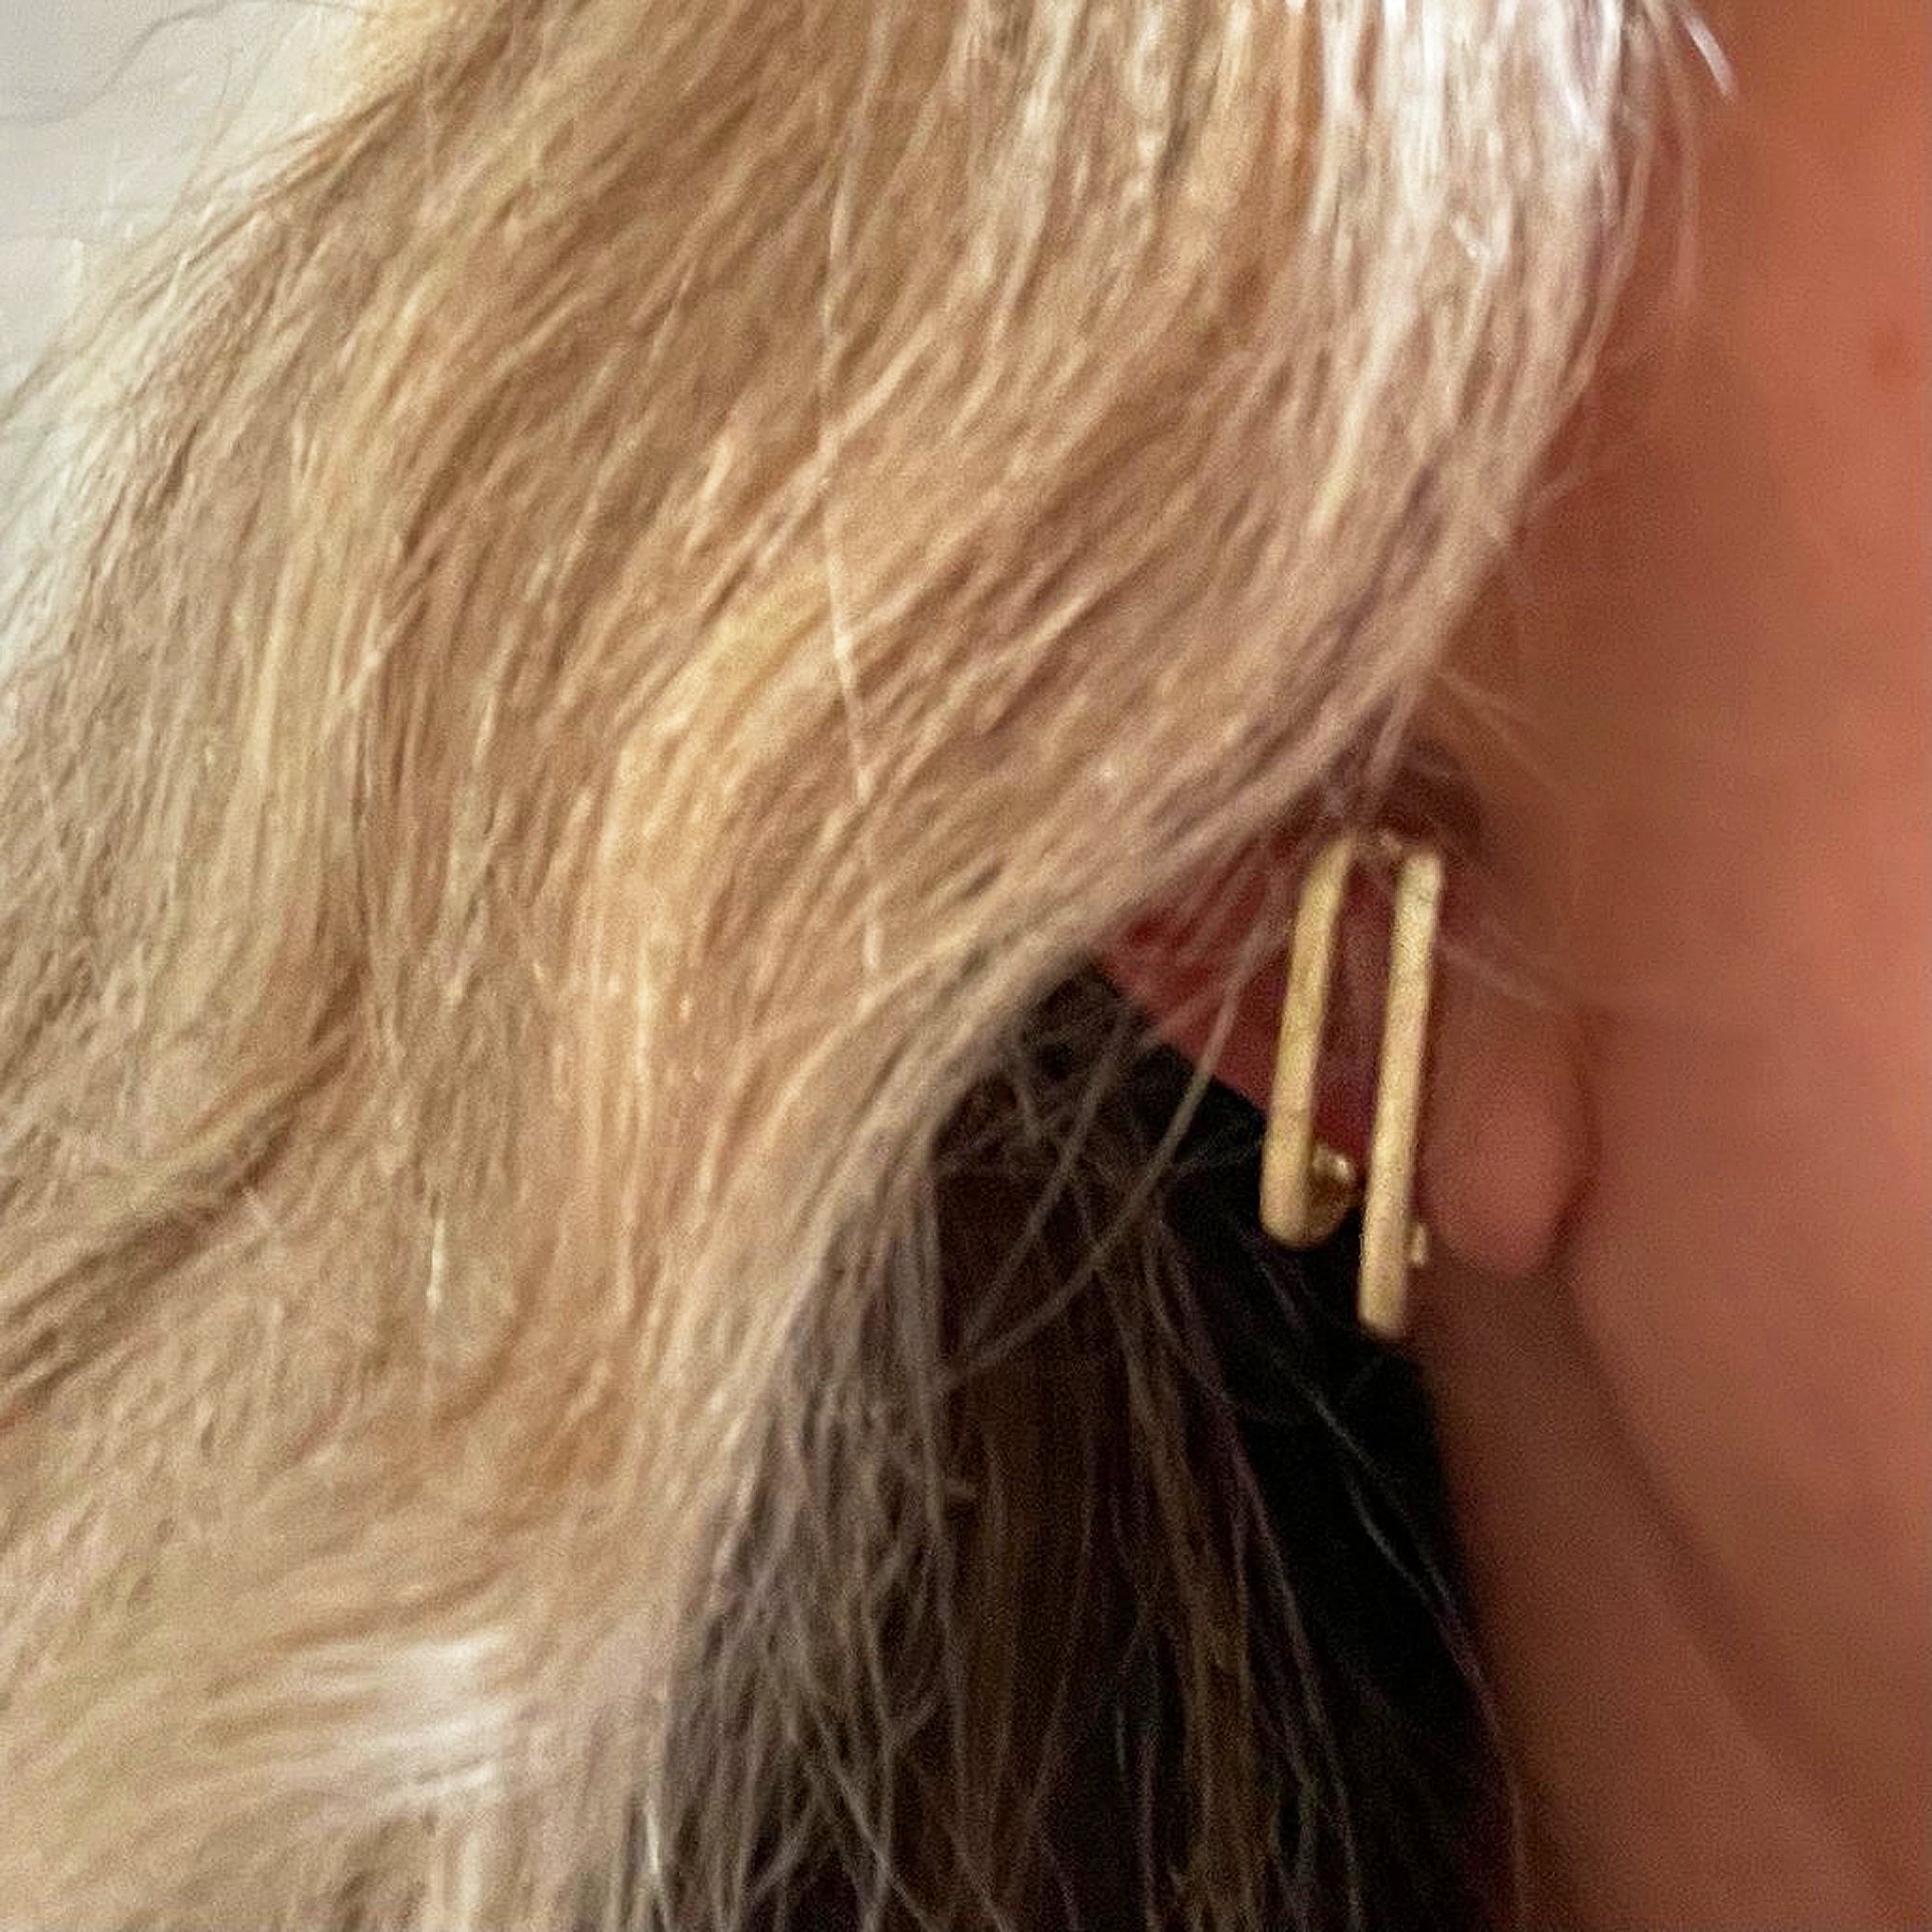 Sheila Fajl Diana Double Hug Ear Cuff Stud Earrings in Brushed Gold Plated